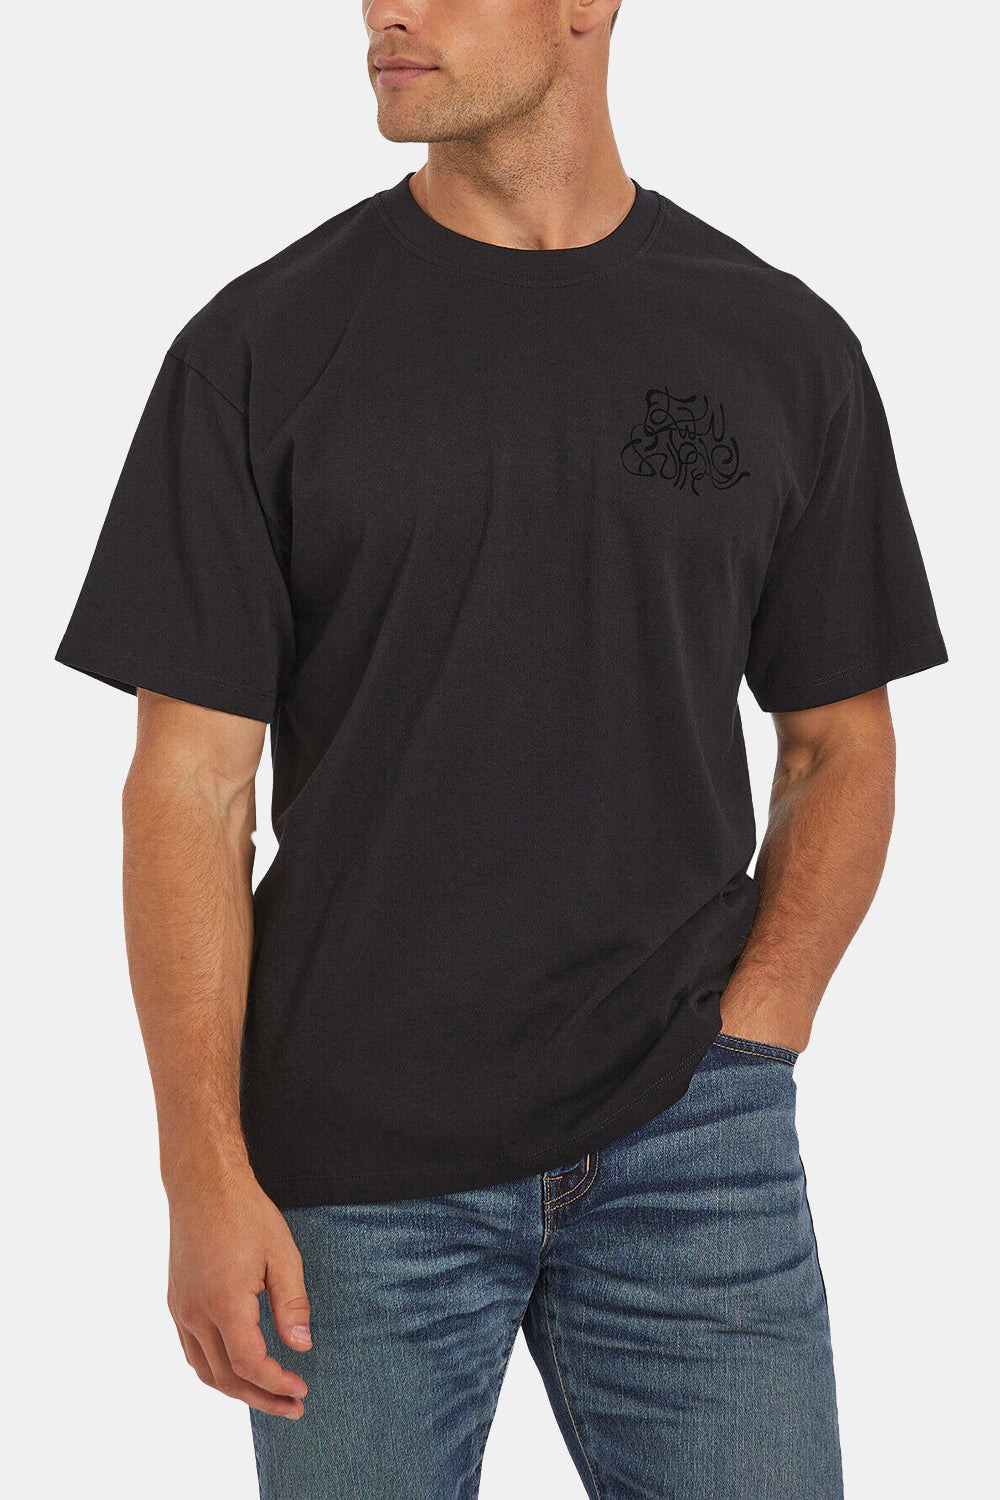 Edwin Hoffmann T-Shirt (Black Garment Wash)